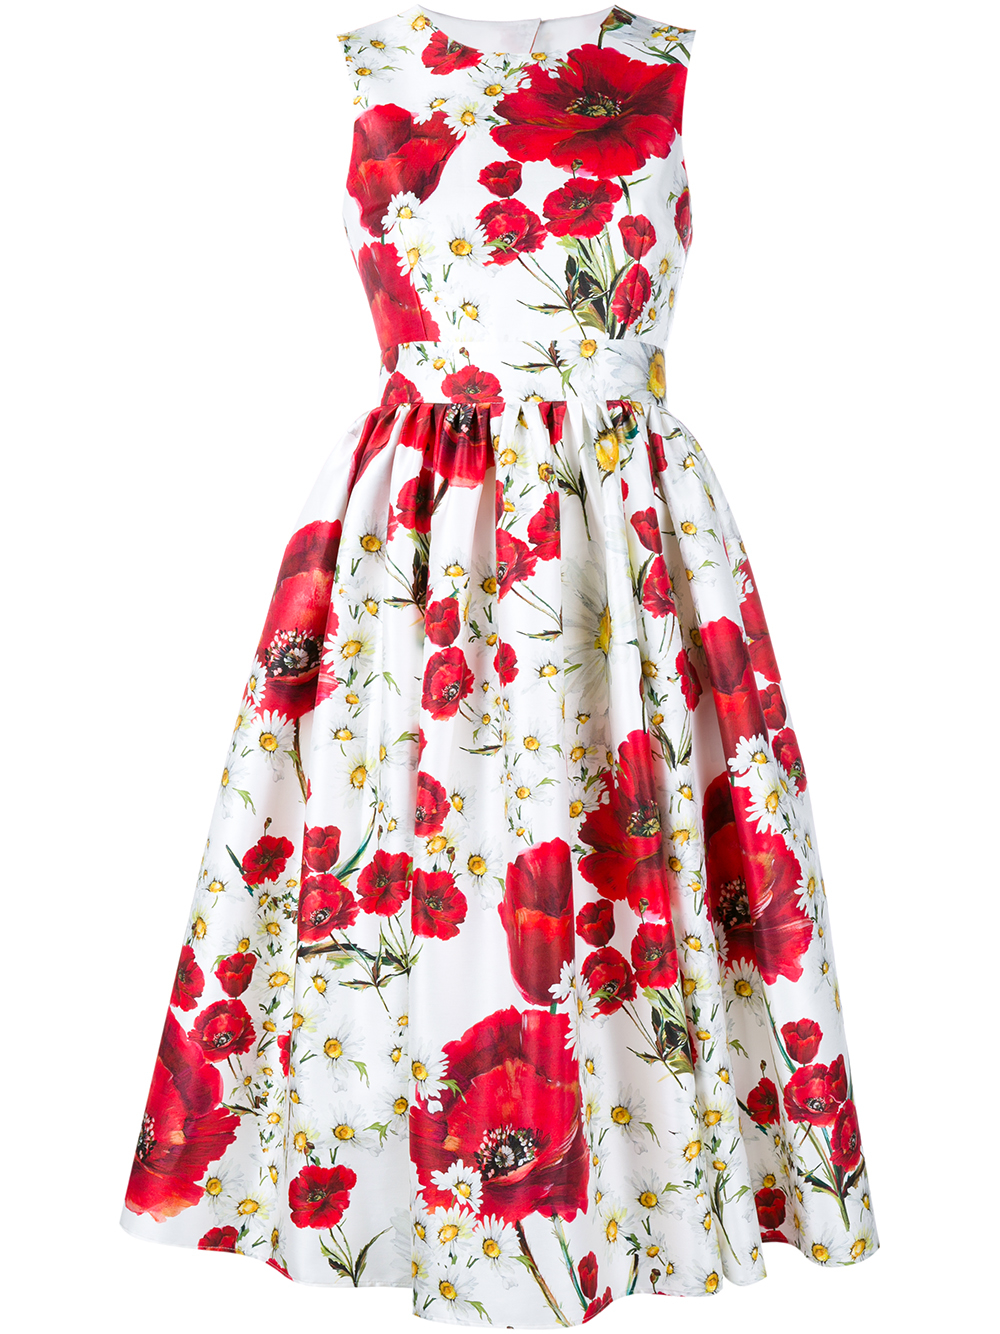 Dolce & gabbana Sleeveless Floral Print Cotton-silk Dress in Red | Lyst